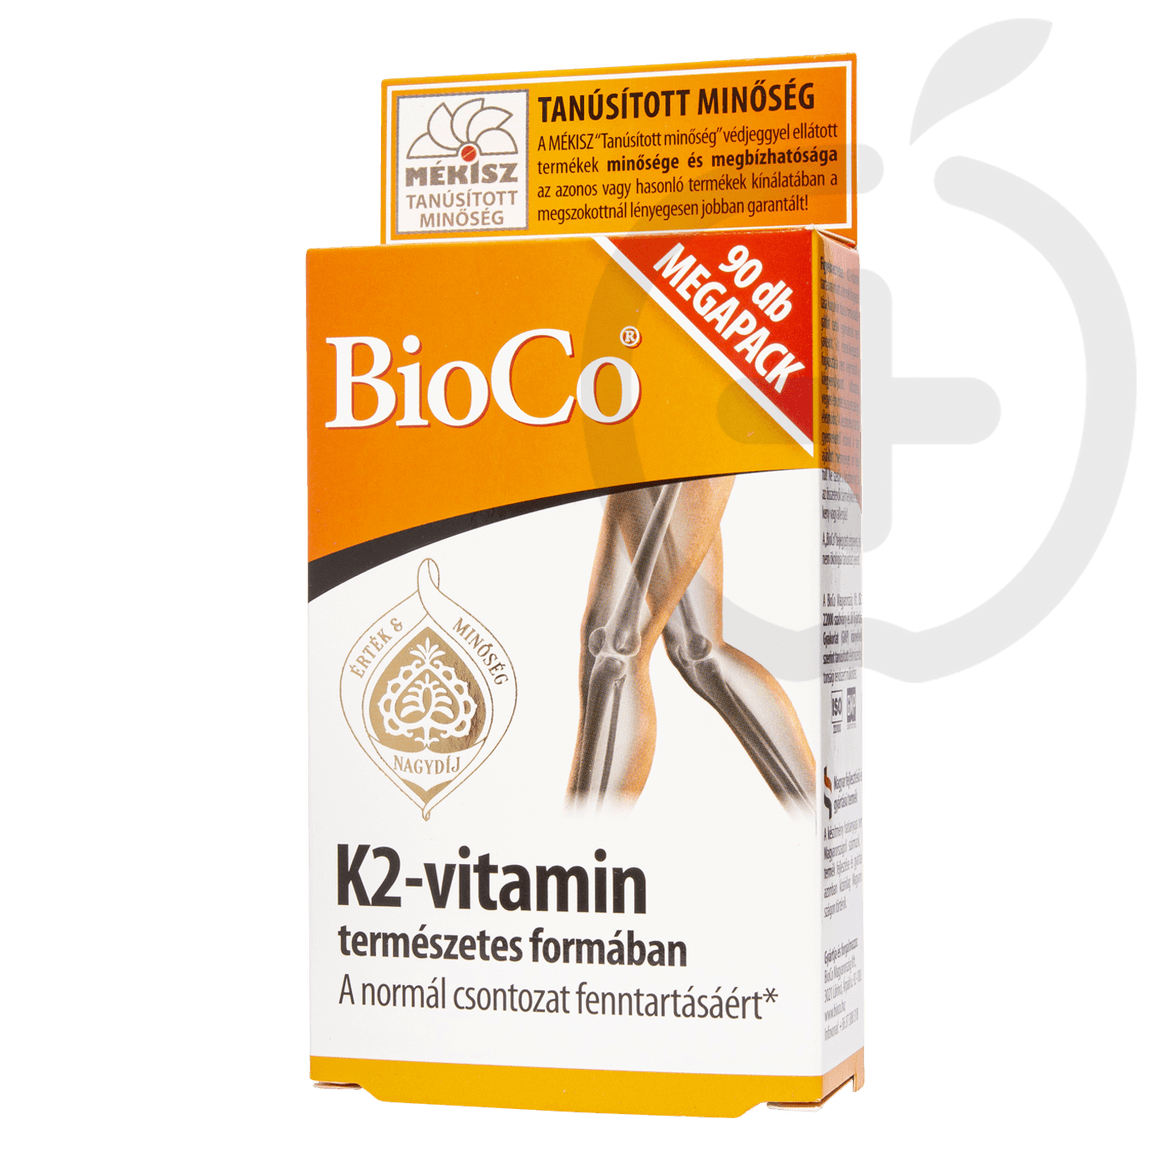 BioCo K2-vitamin étrend-kiegészítő tabletta